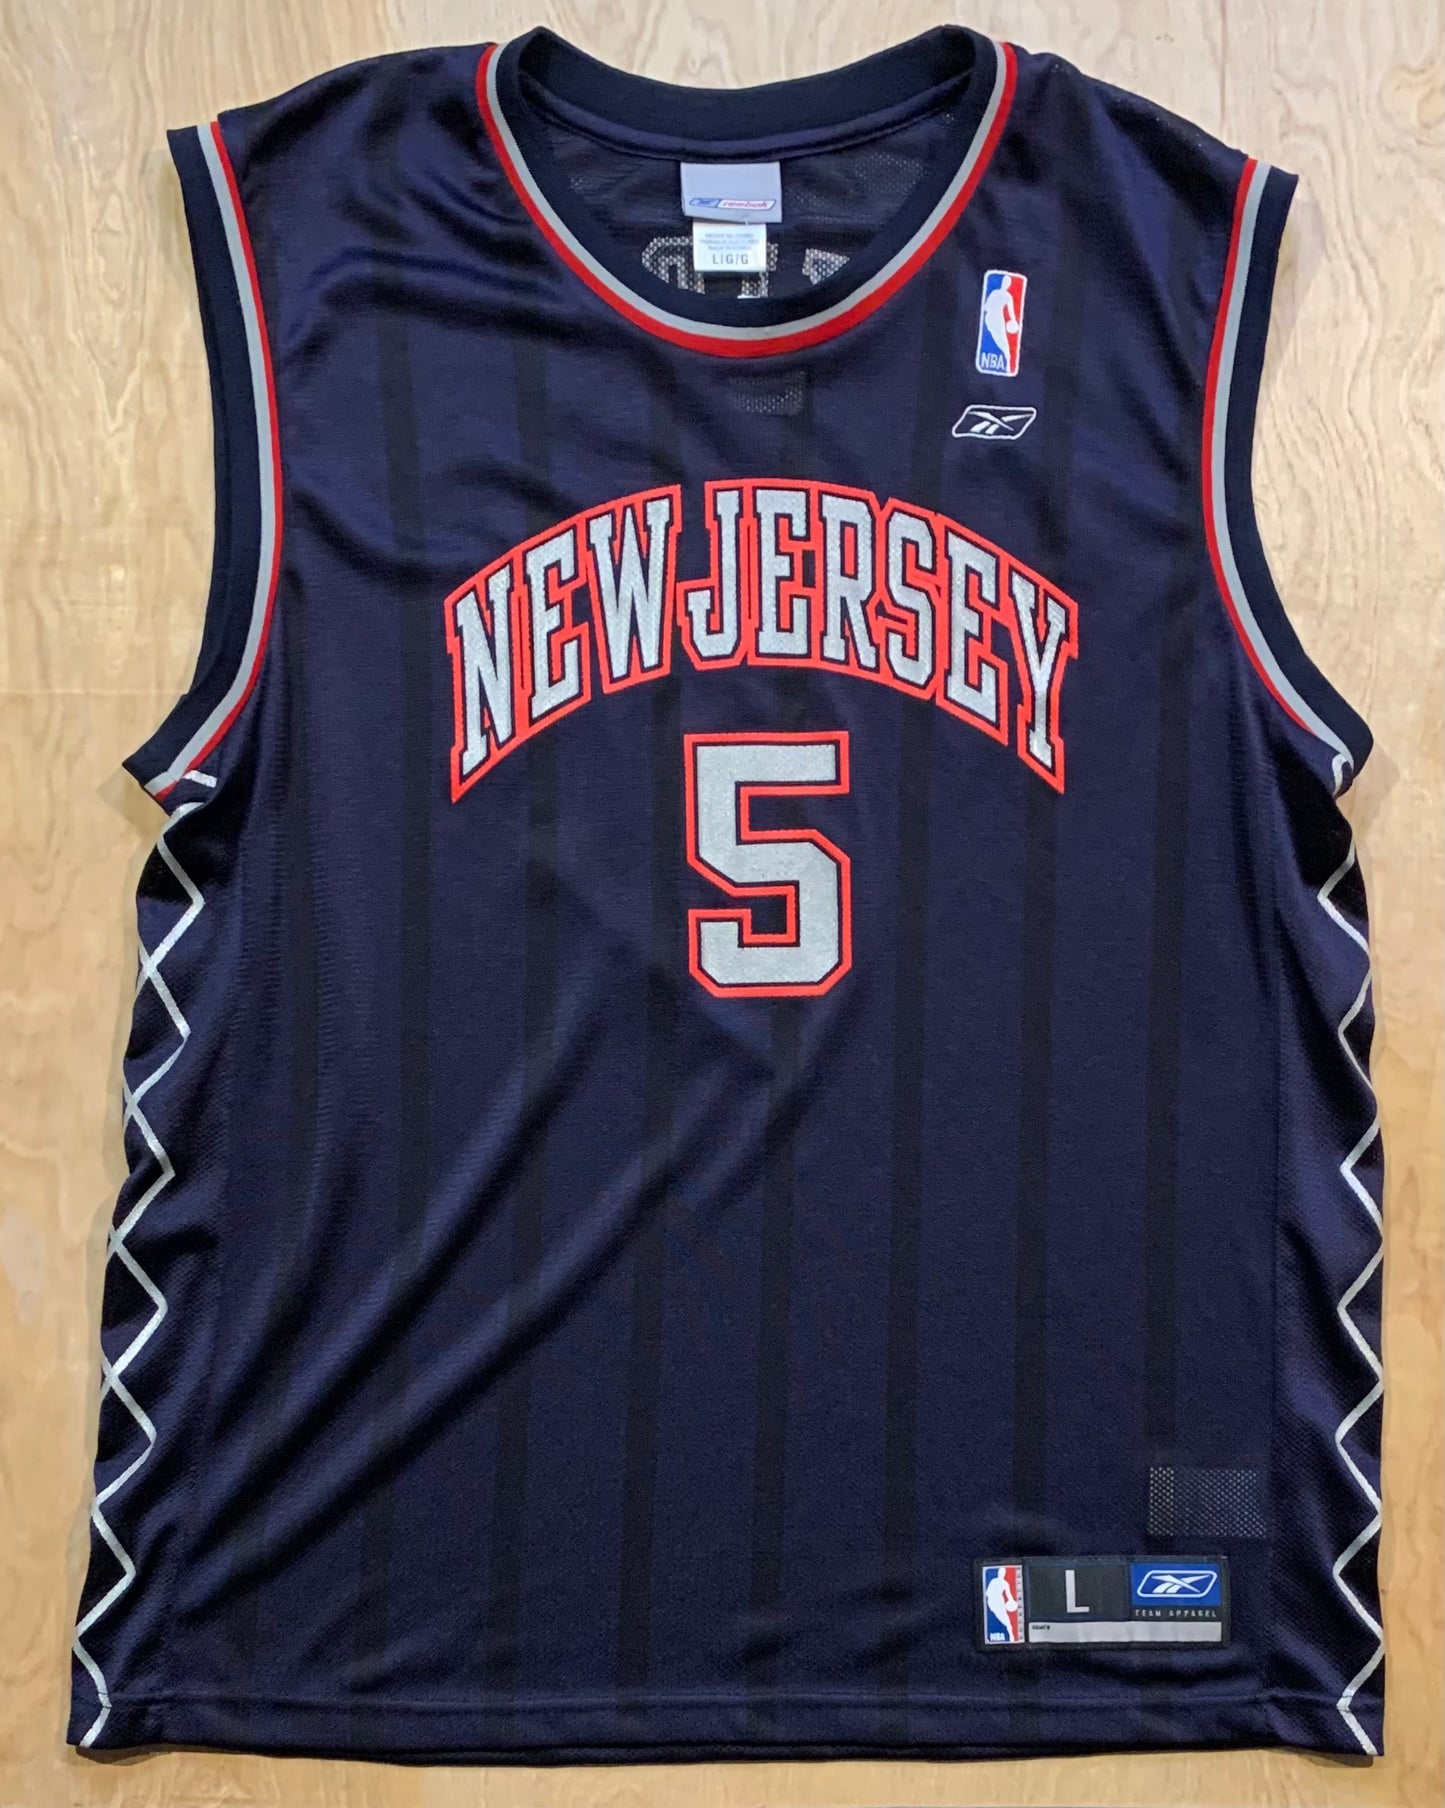 Throwback New Jersey Nets Jason Kidd Reebok Jersey